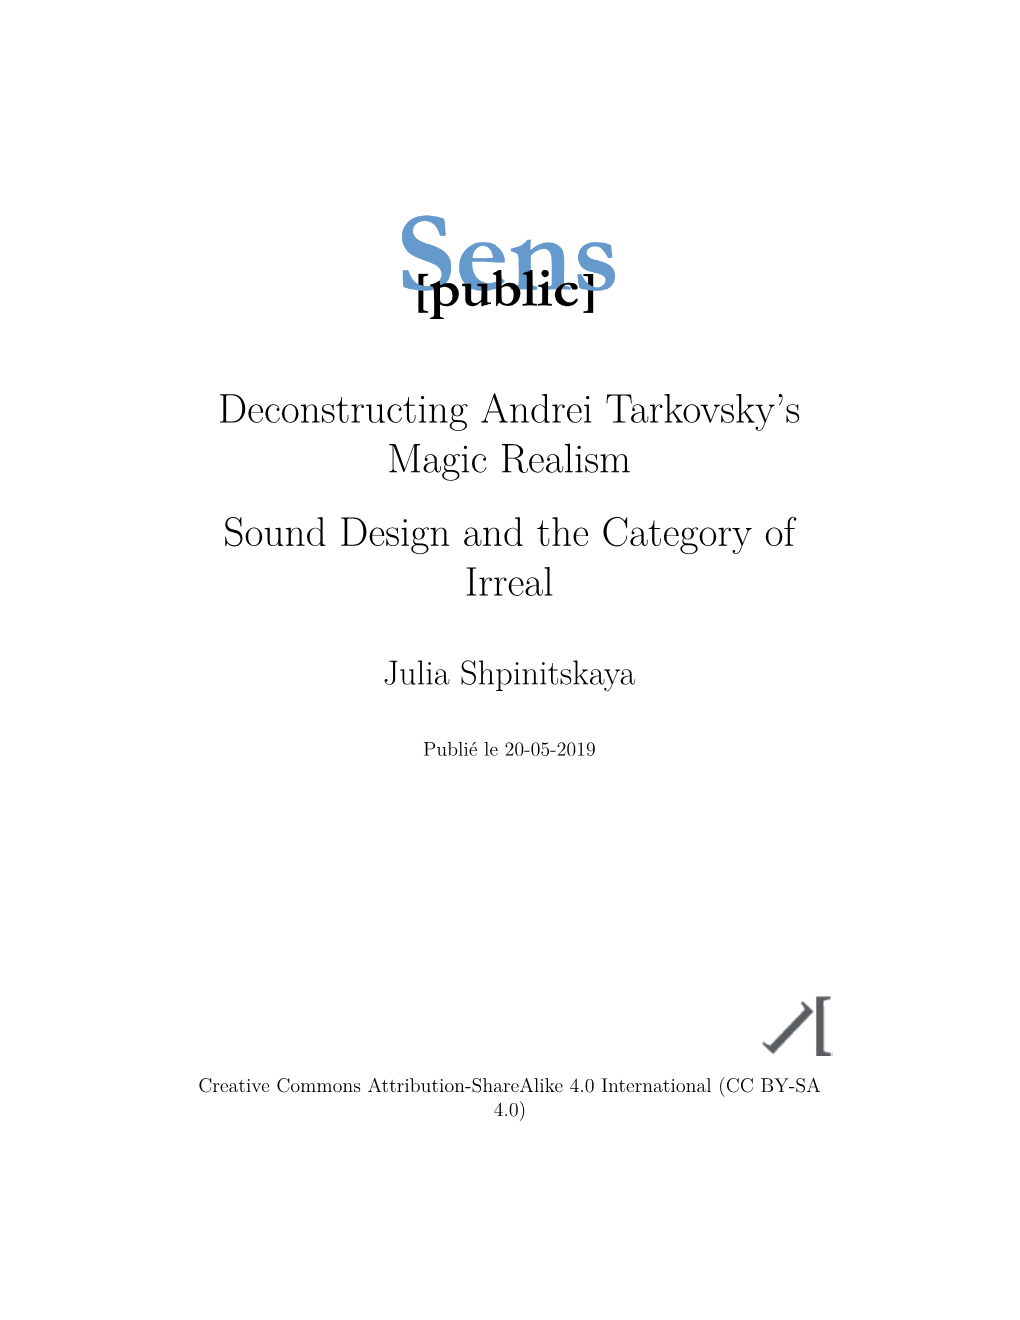 Deconstructing Andrei Tarkovsky's Magic Realism : Sound Design And